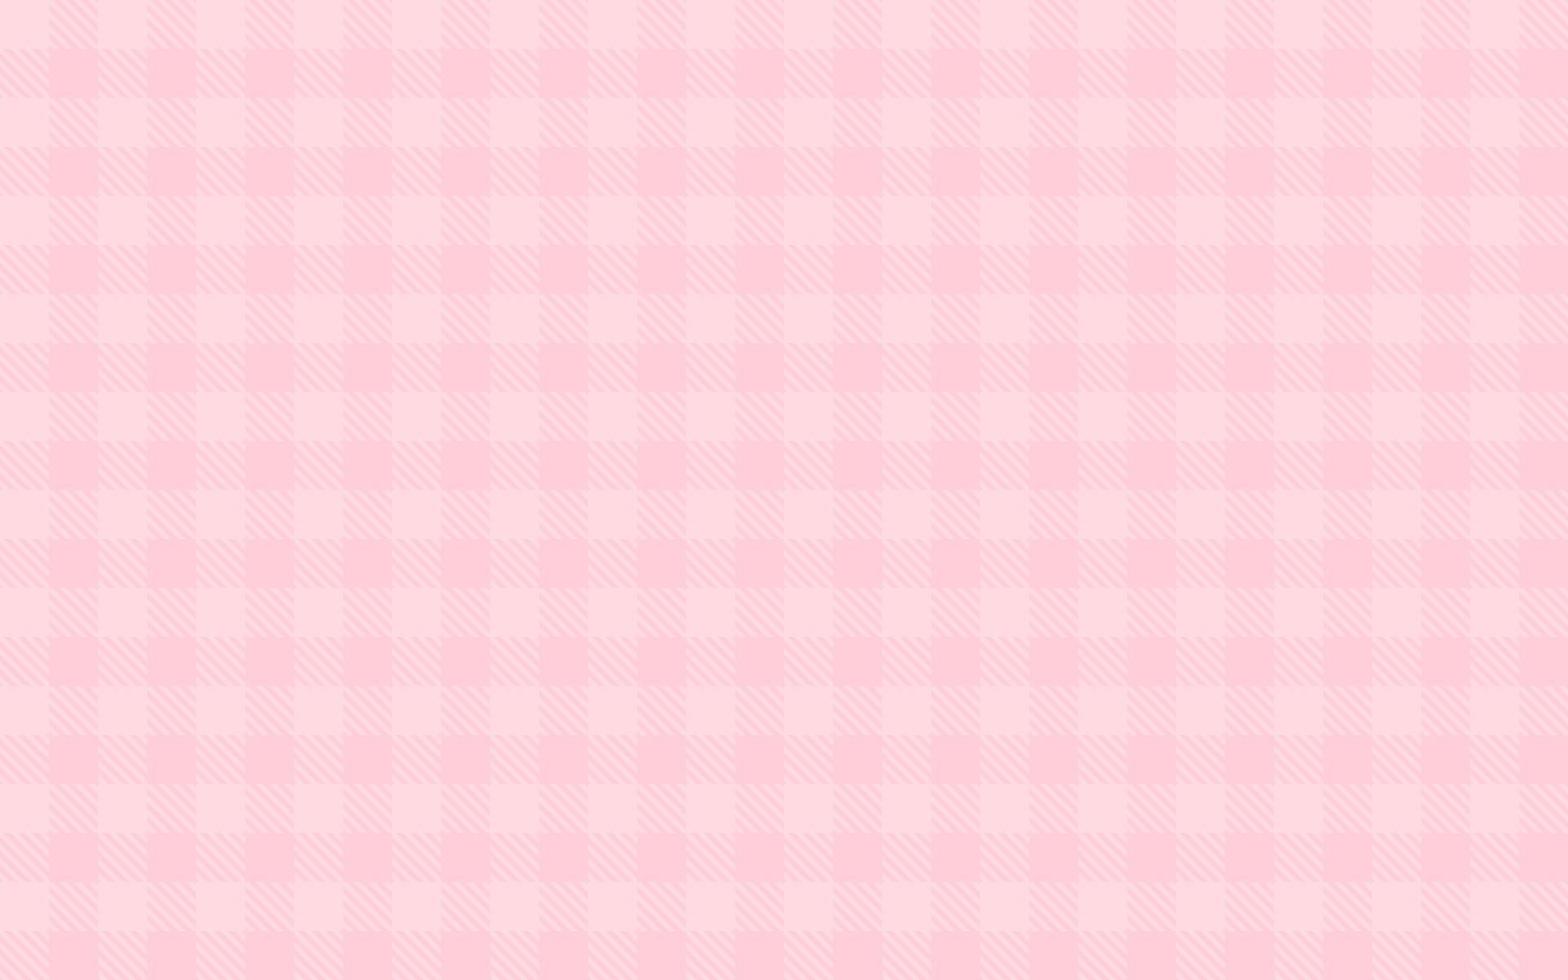 Pink background buffalo plaid design. Vector illustration. Eps10